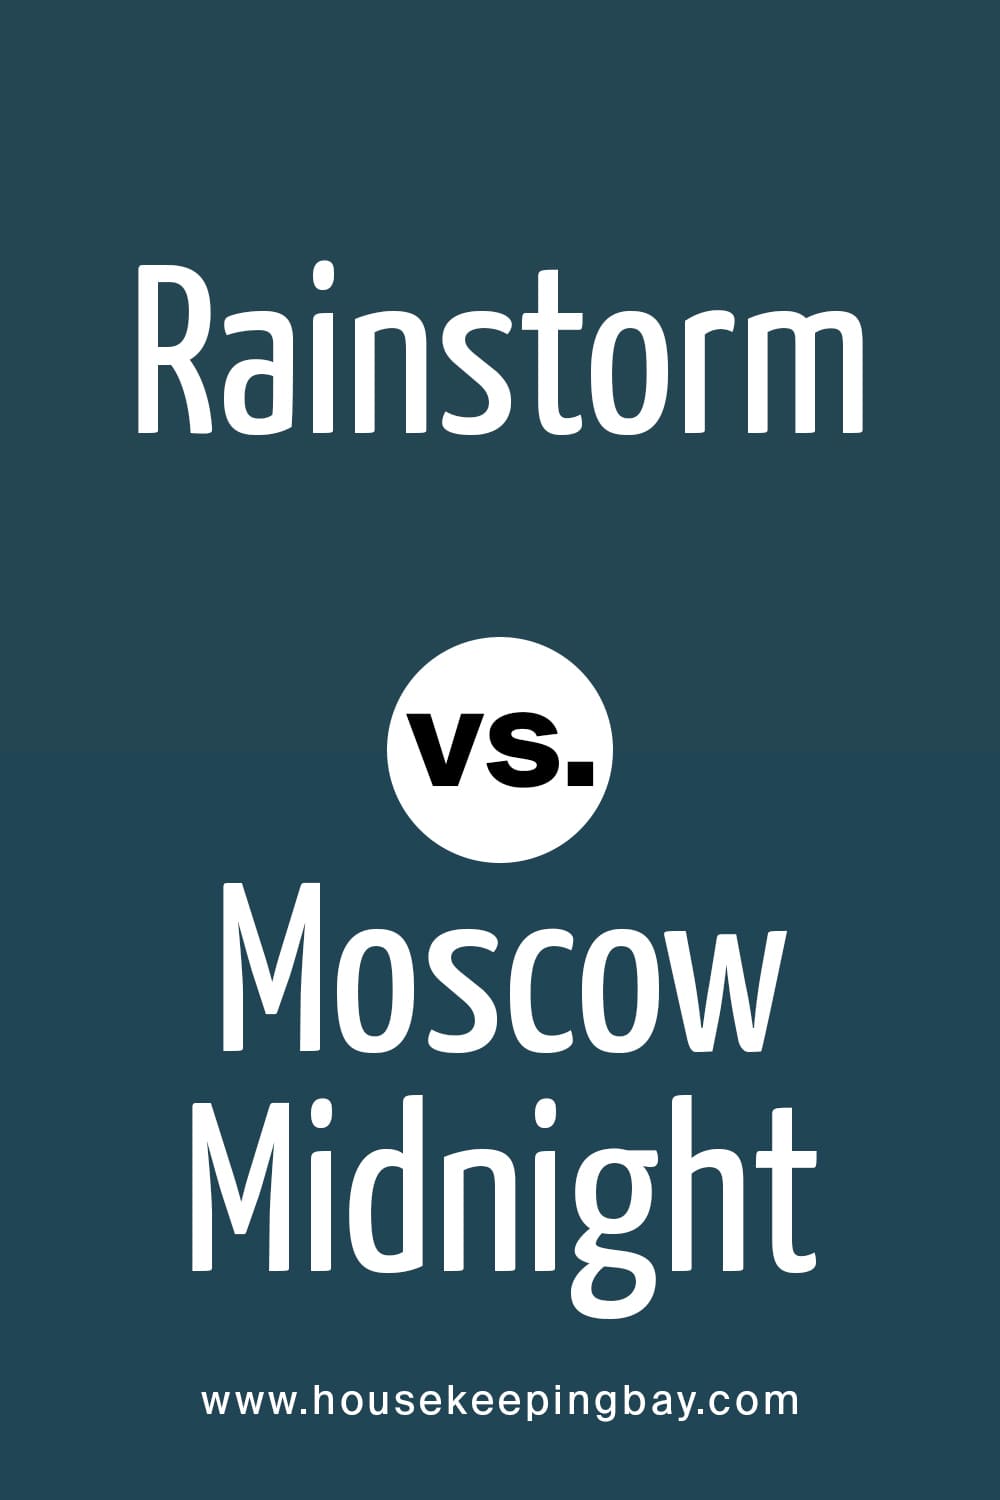 Rainstorm VS Moscow Midnight